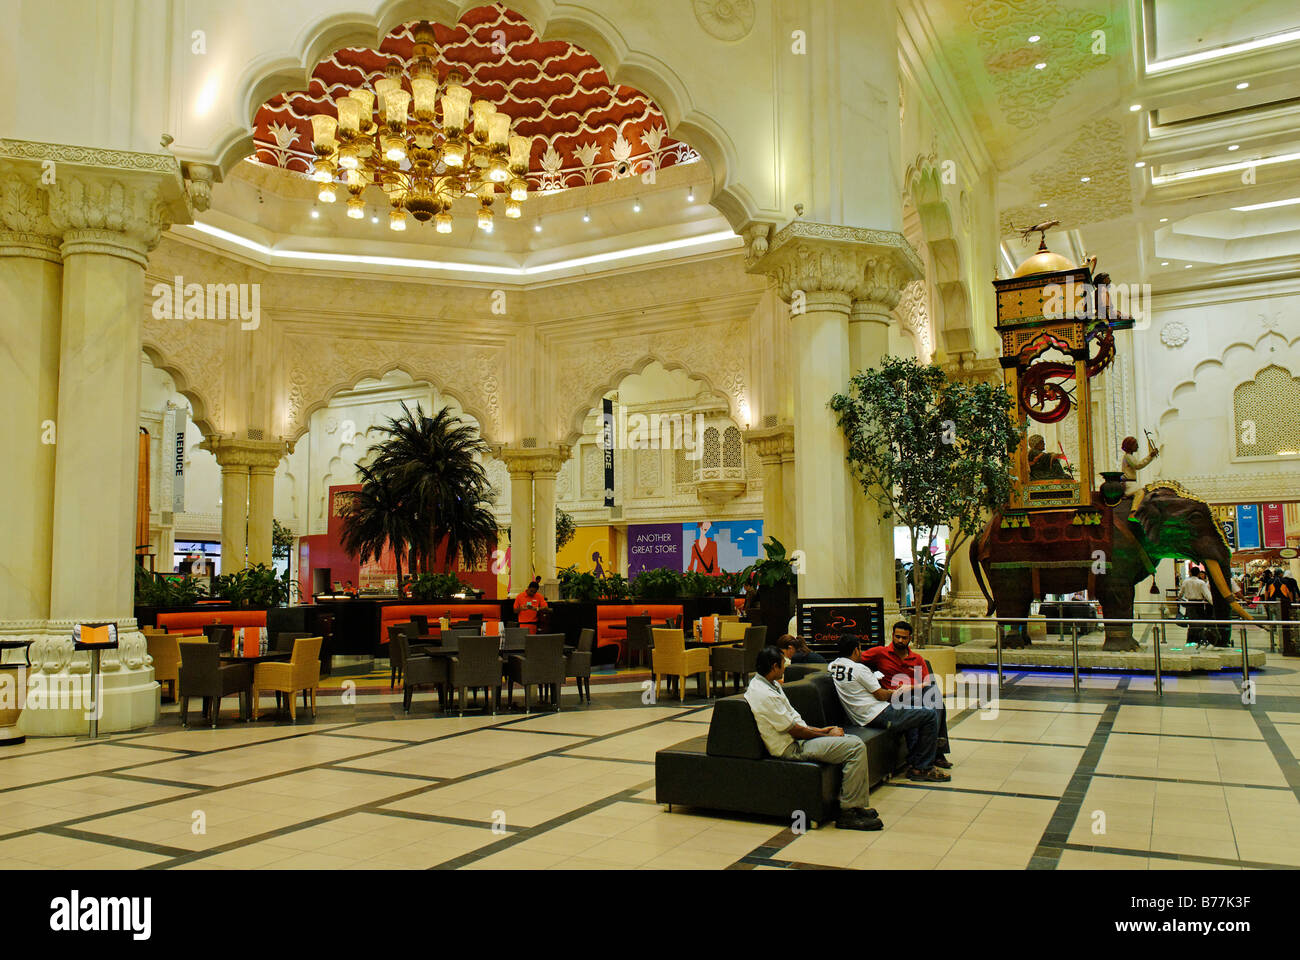 Ibn Battuta shopping mall, Emirate of Dubai, United Arab Emirates, Arabia, Near East Stock Photo